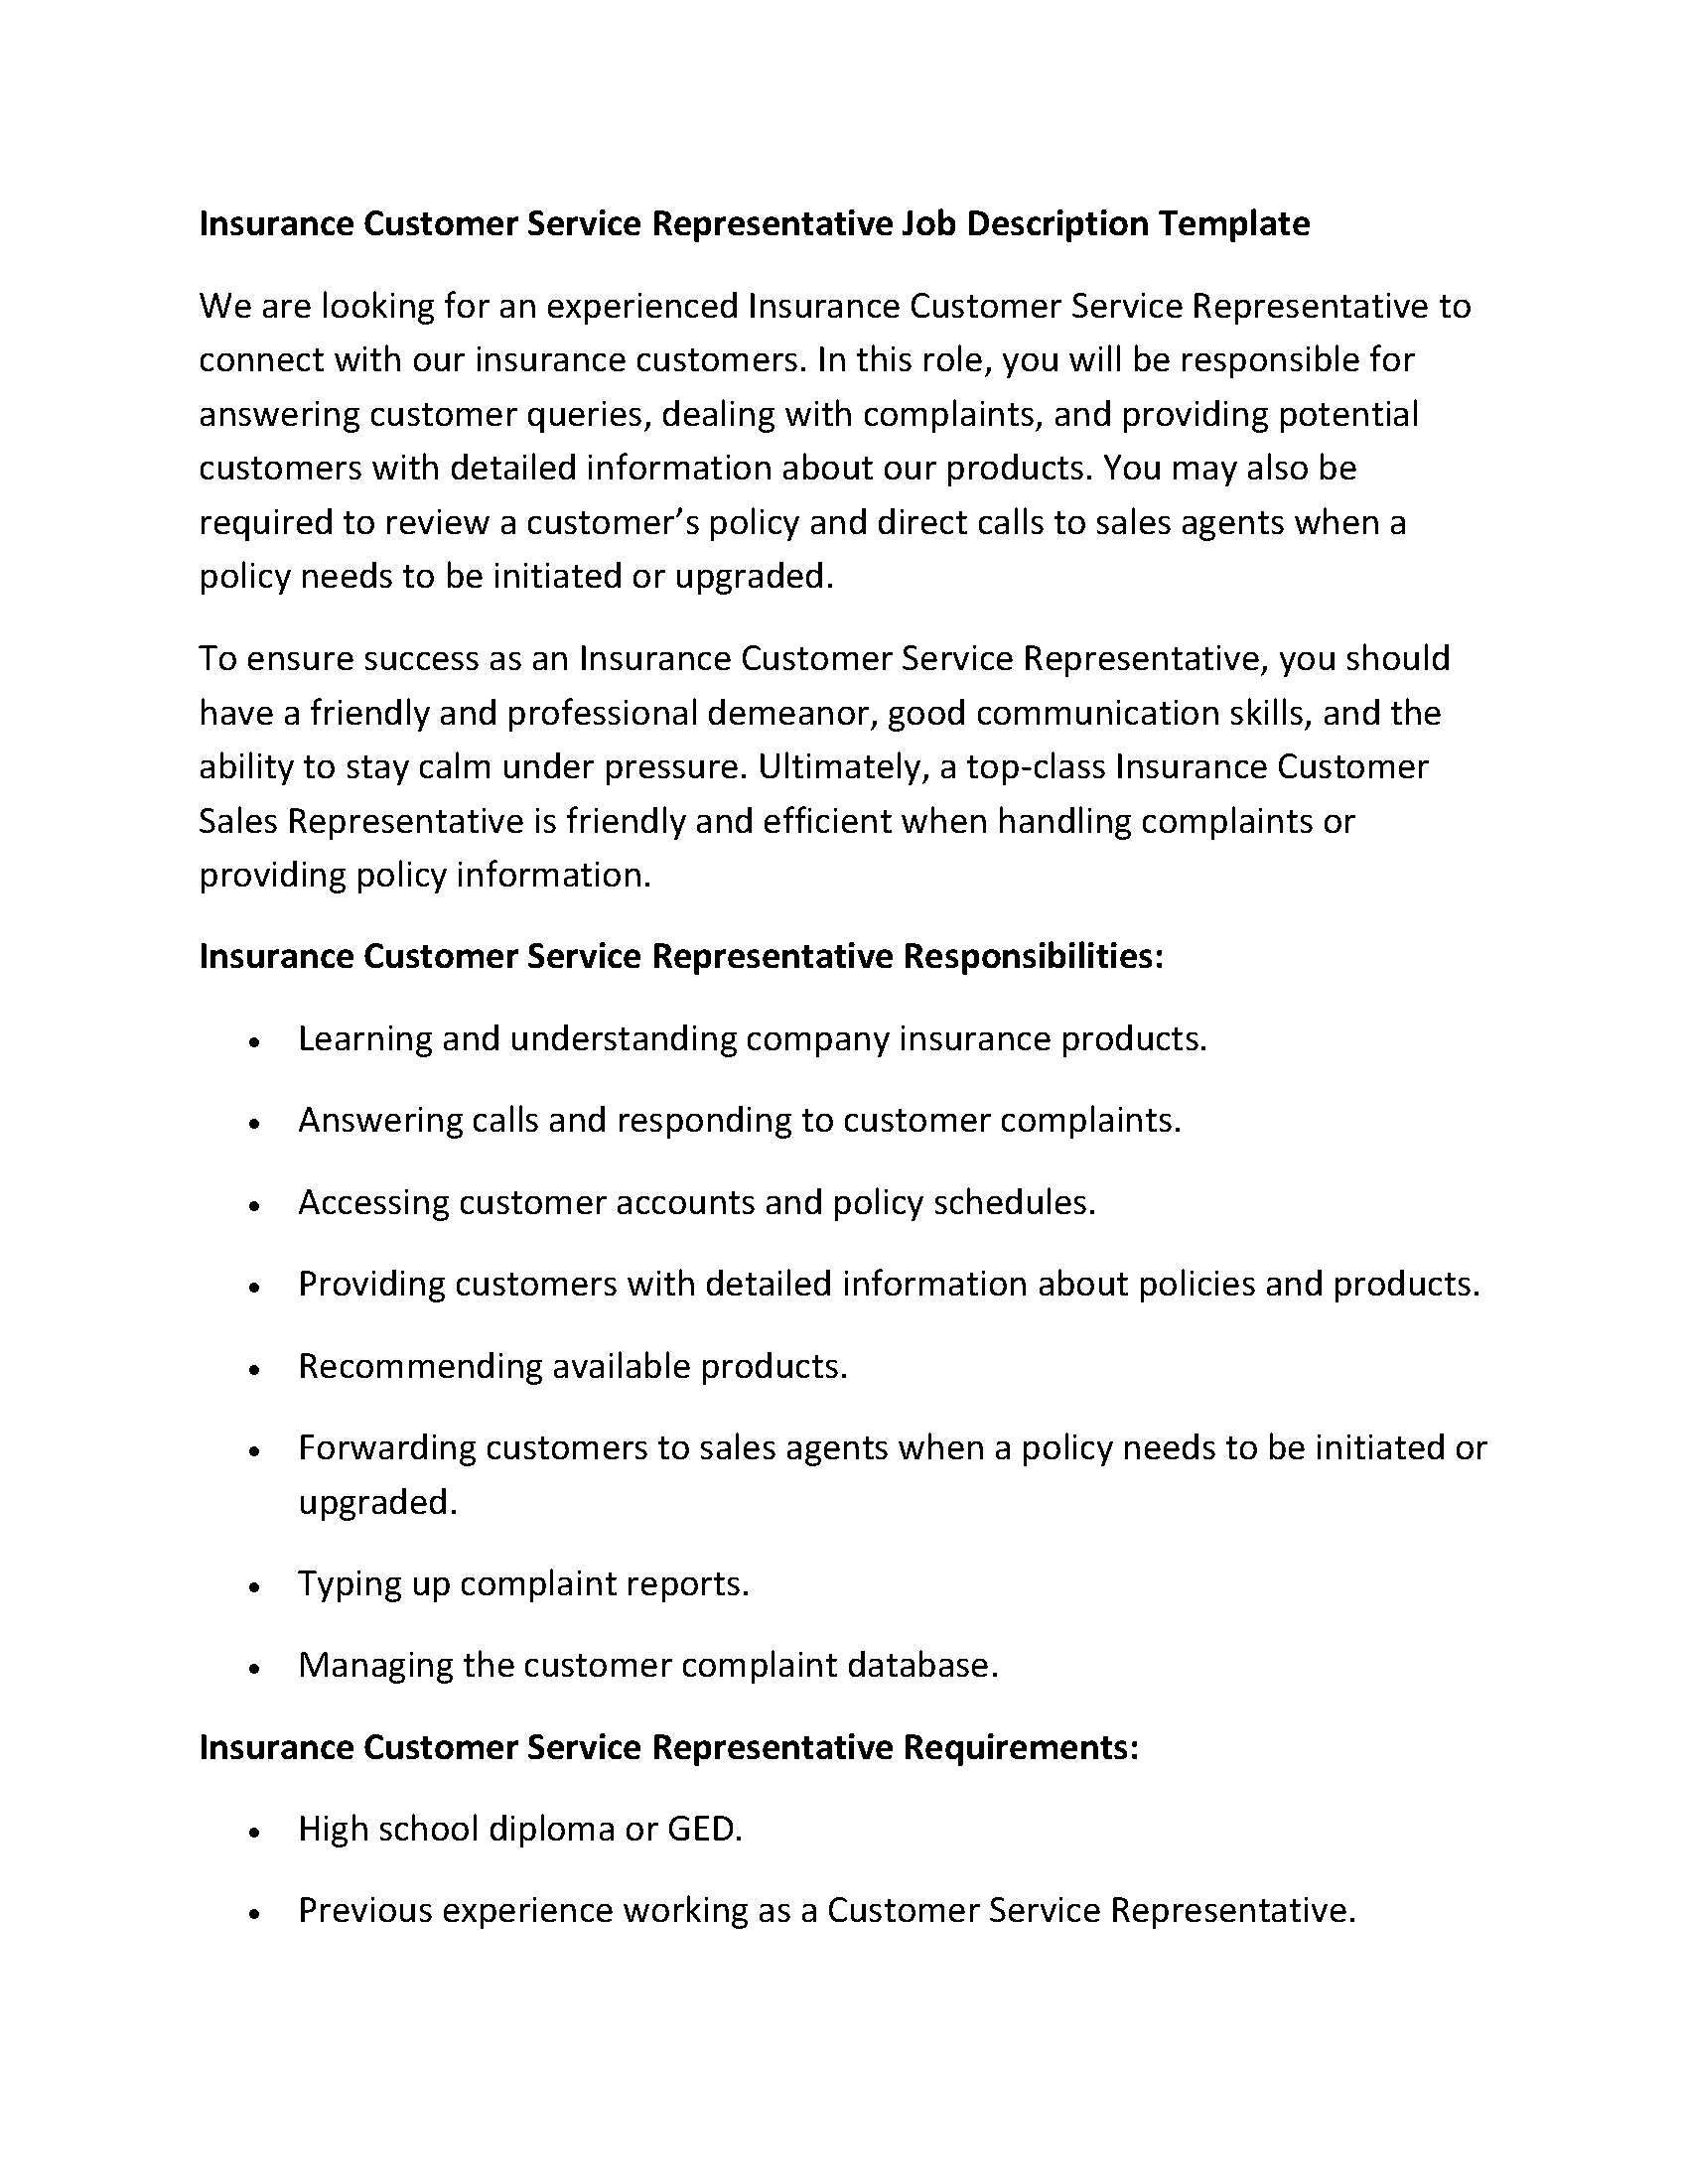 Insurance Customer Service Representative Job Description Templat1